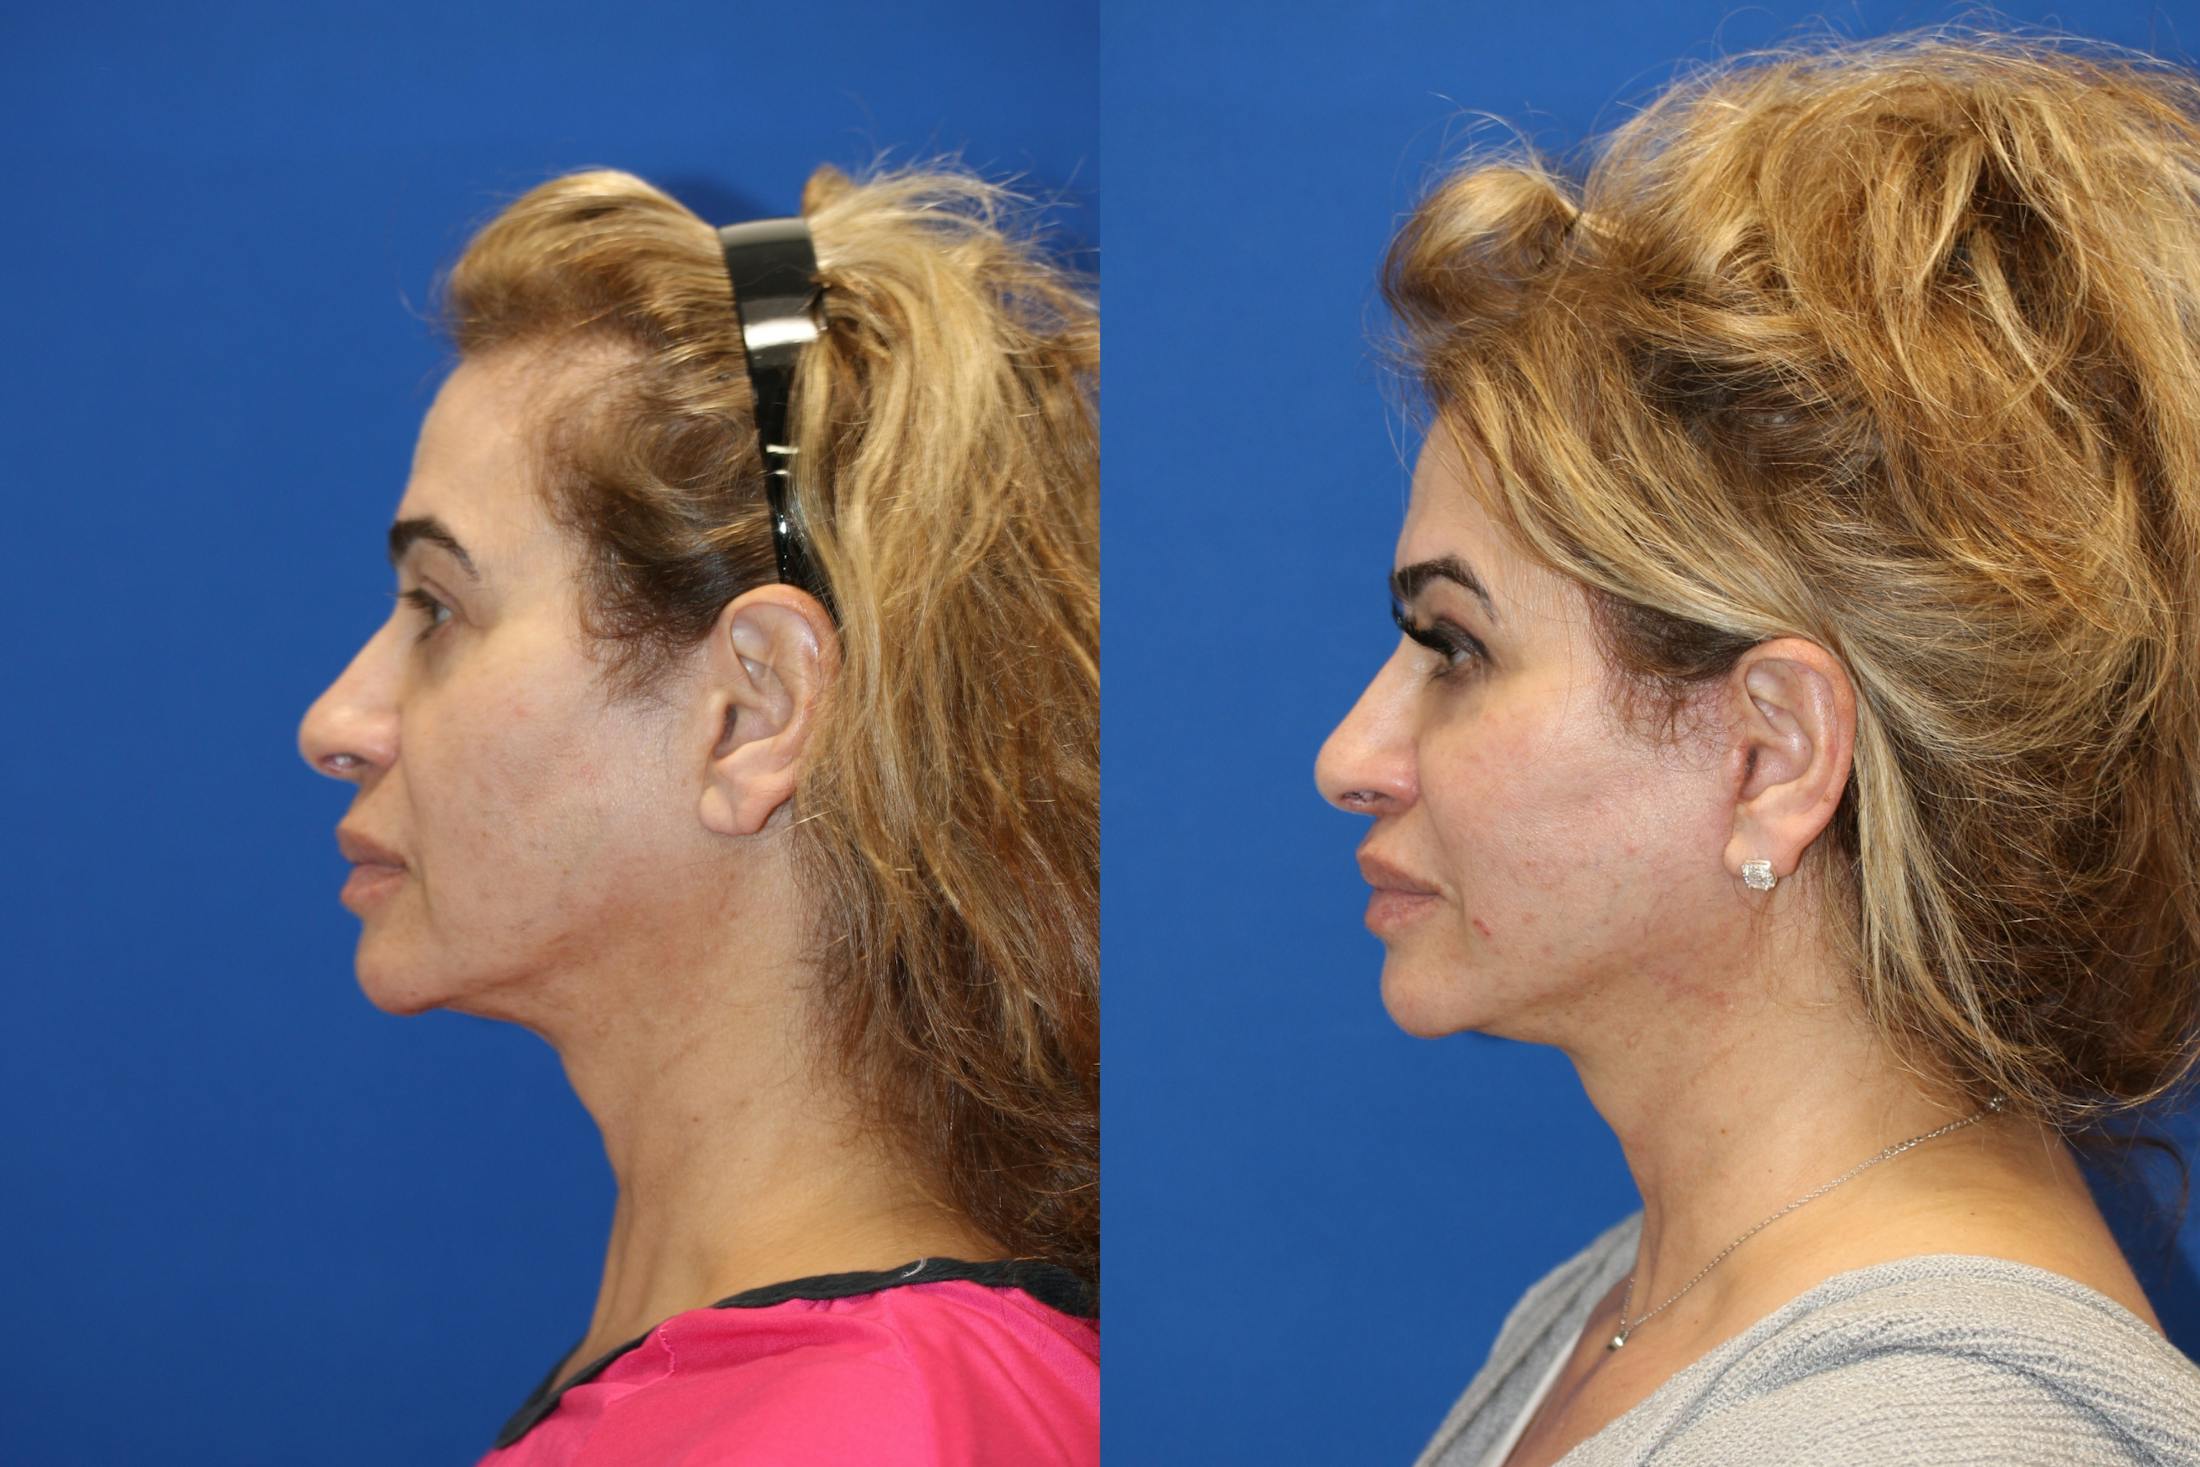 Vertical Restore® / Facial Rejuvenation Before & After Gallery - Patient 153265720 - Image 3